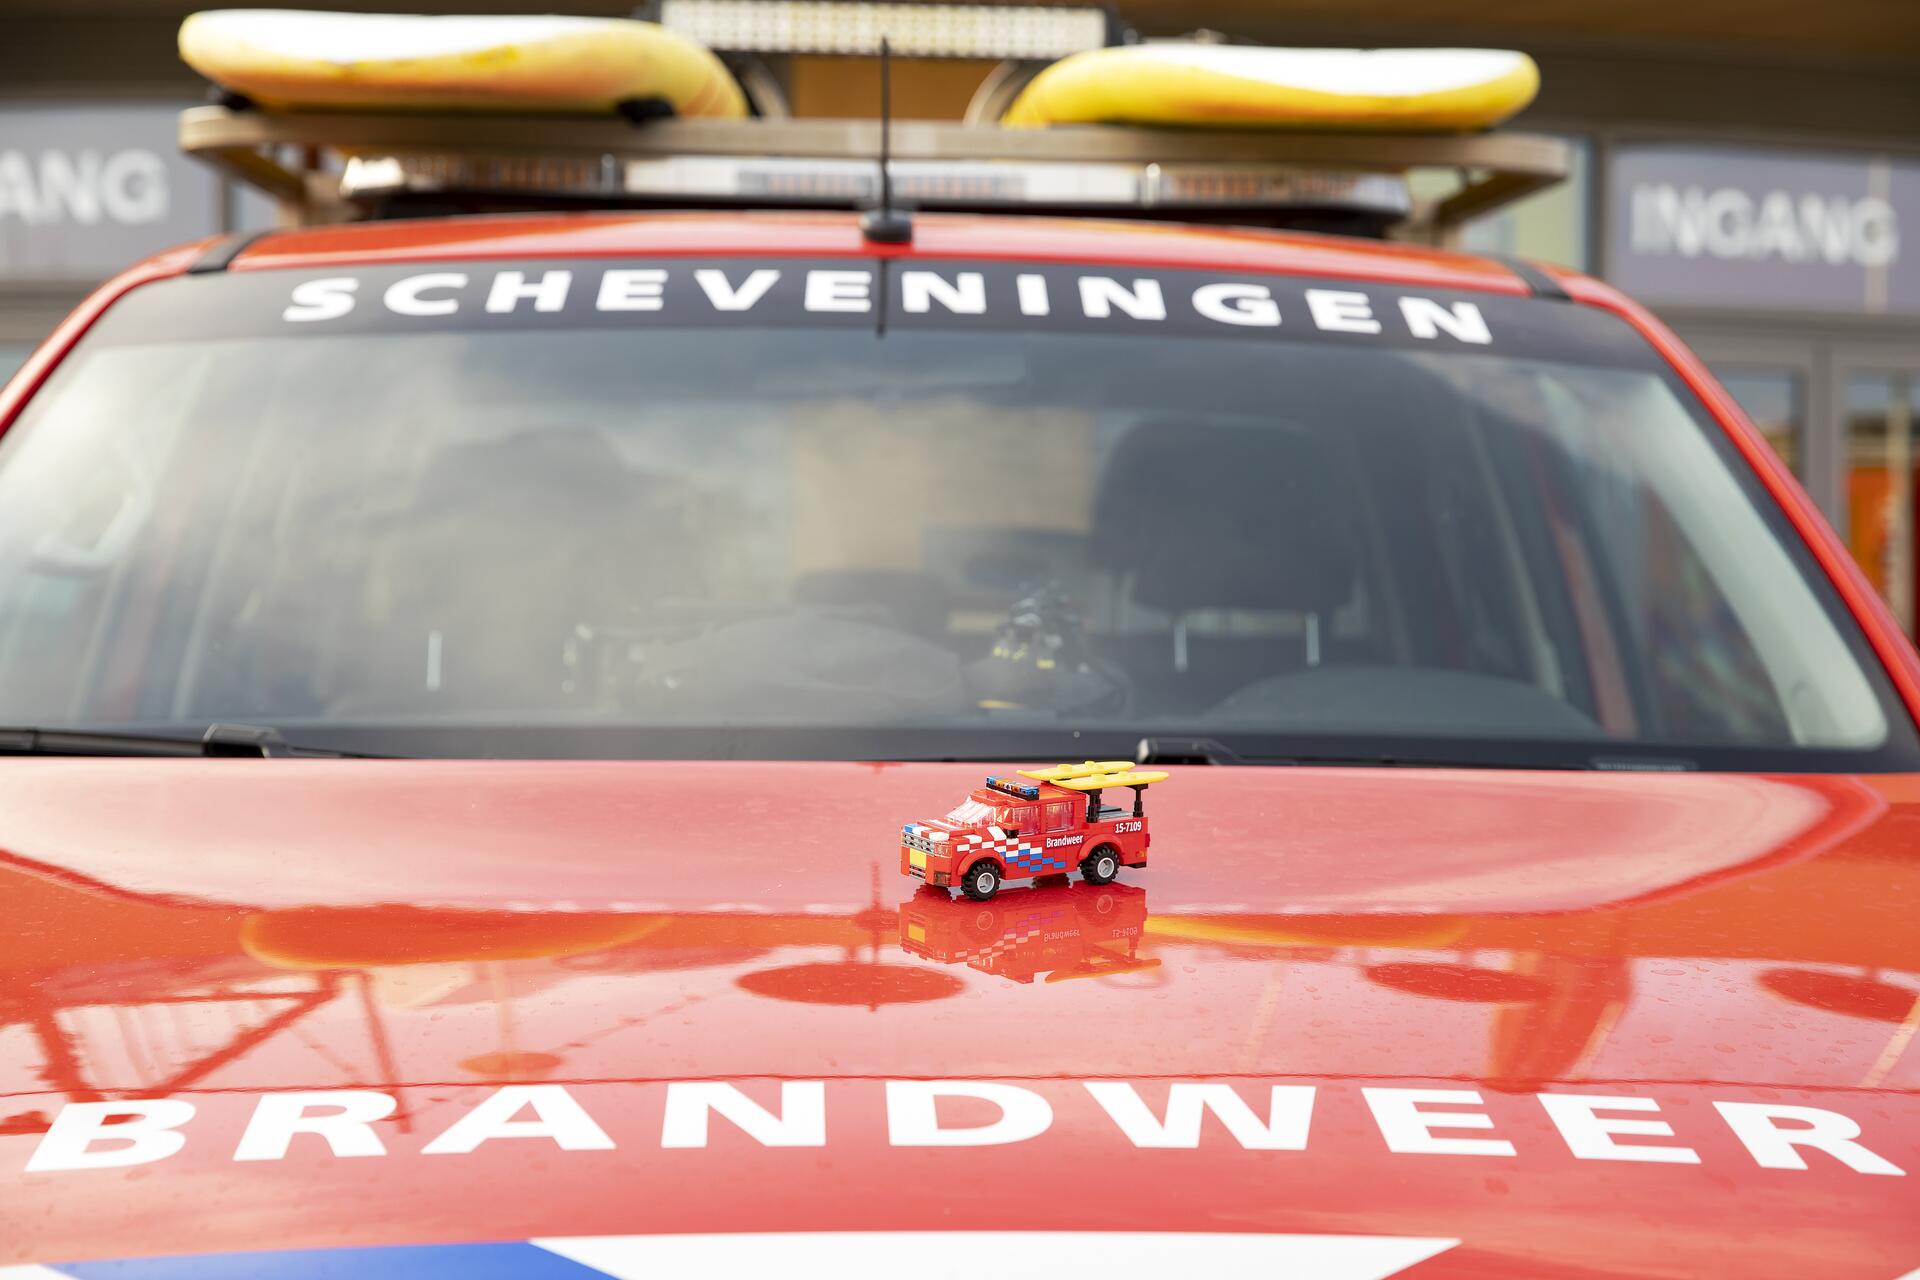 Lego-brandweerauto op echte brandweerauto